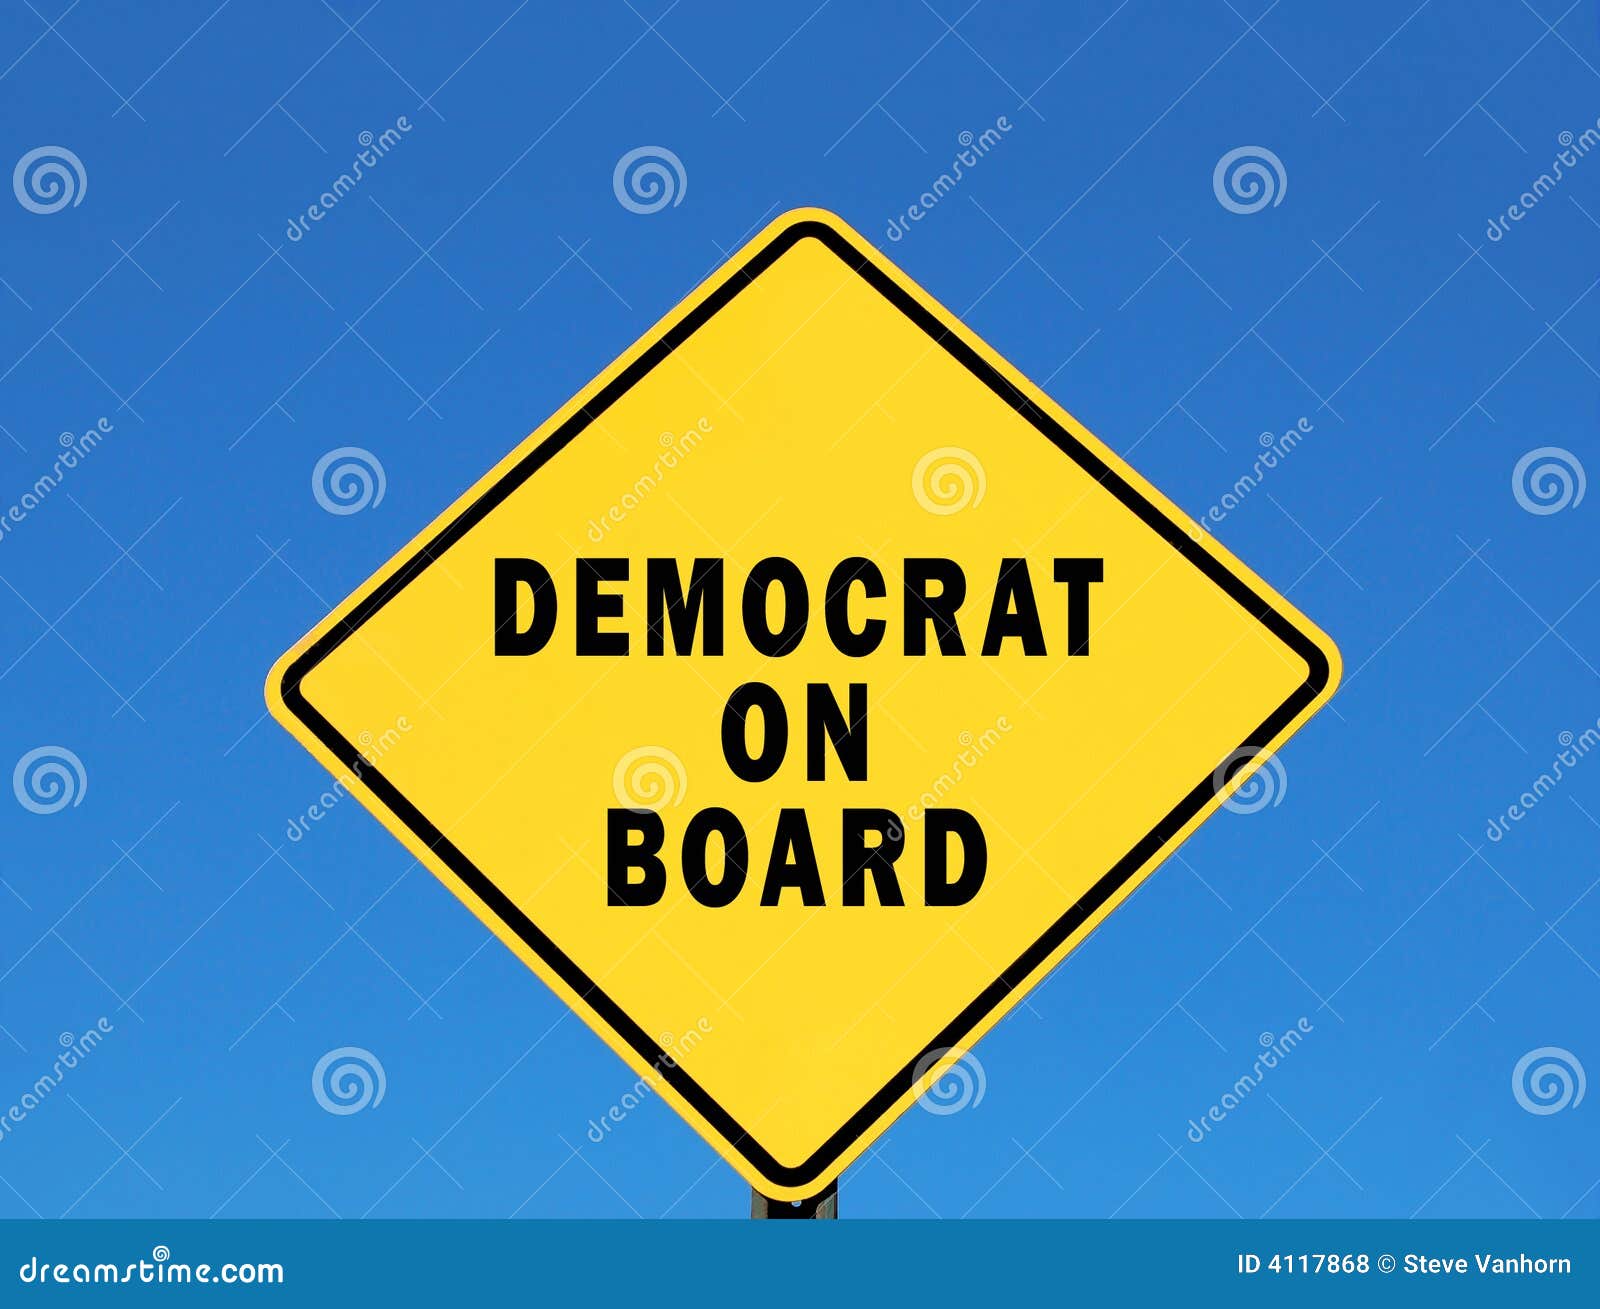 democrat on board